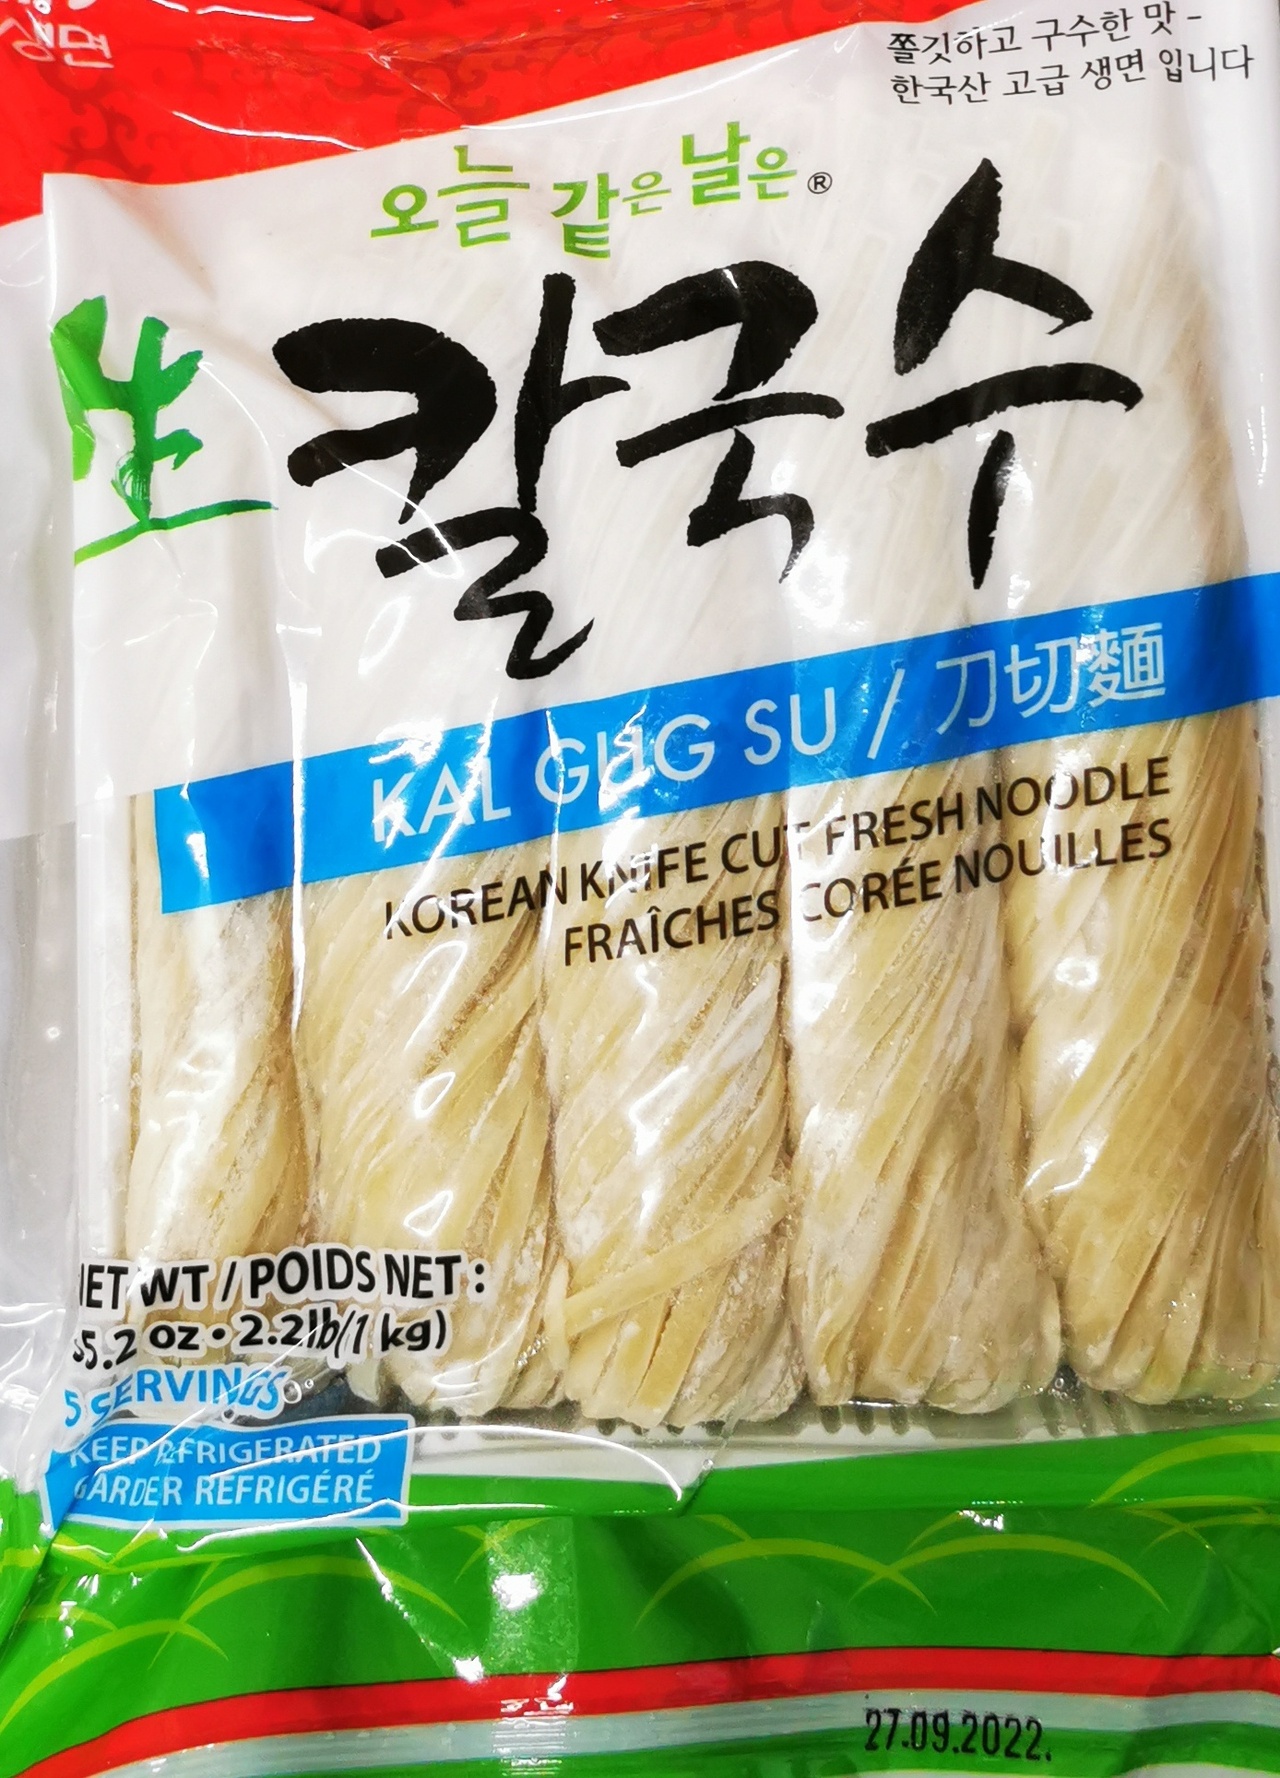 DAEPAN KOREAN KNIFE CUT FRESH NOODLES  1kg